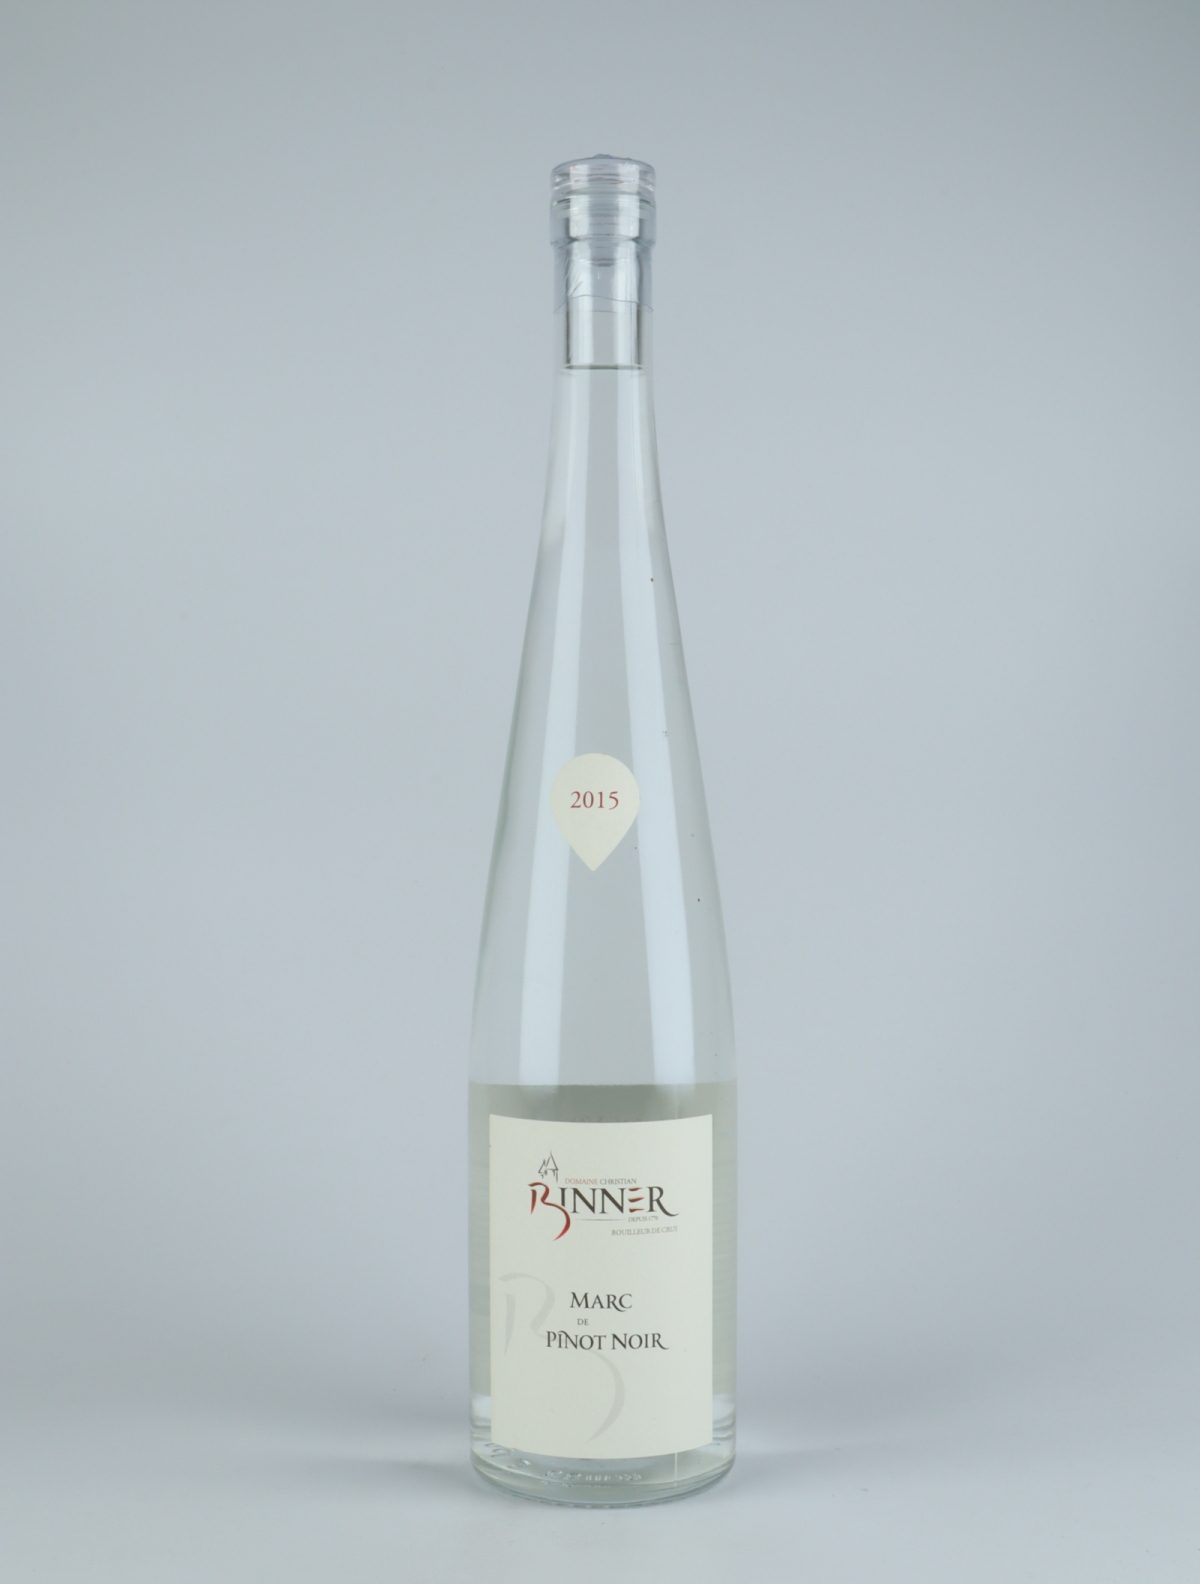 A bottle 2015 Marc de Pinot Noir Spirits from Domaine Christian Binner, Alsace in France